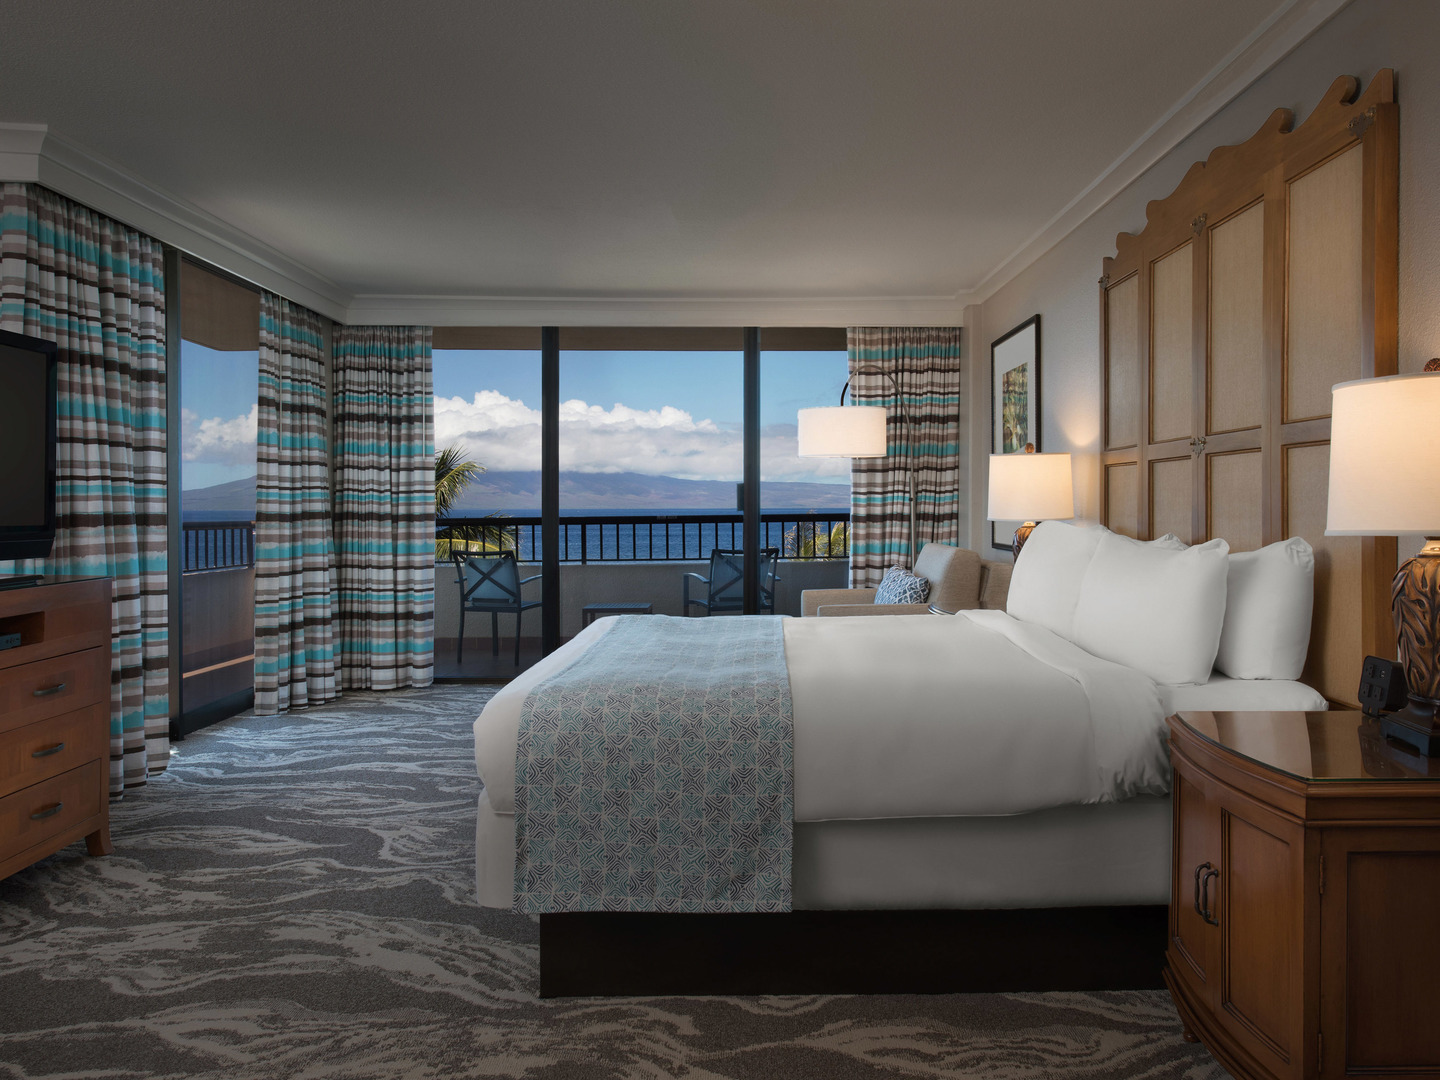 Marriott's Maui Ocean Club - Molokai, Maui, and Lanai Towers Villa Master Bedroom. Marriott's Maui Ocean Club - Molokai, Maui, and Lanai Towers is located in Lāhainā, Maui, Hawai‘i United States.